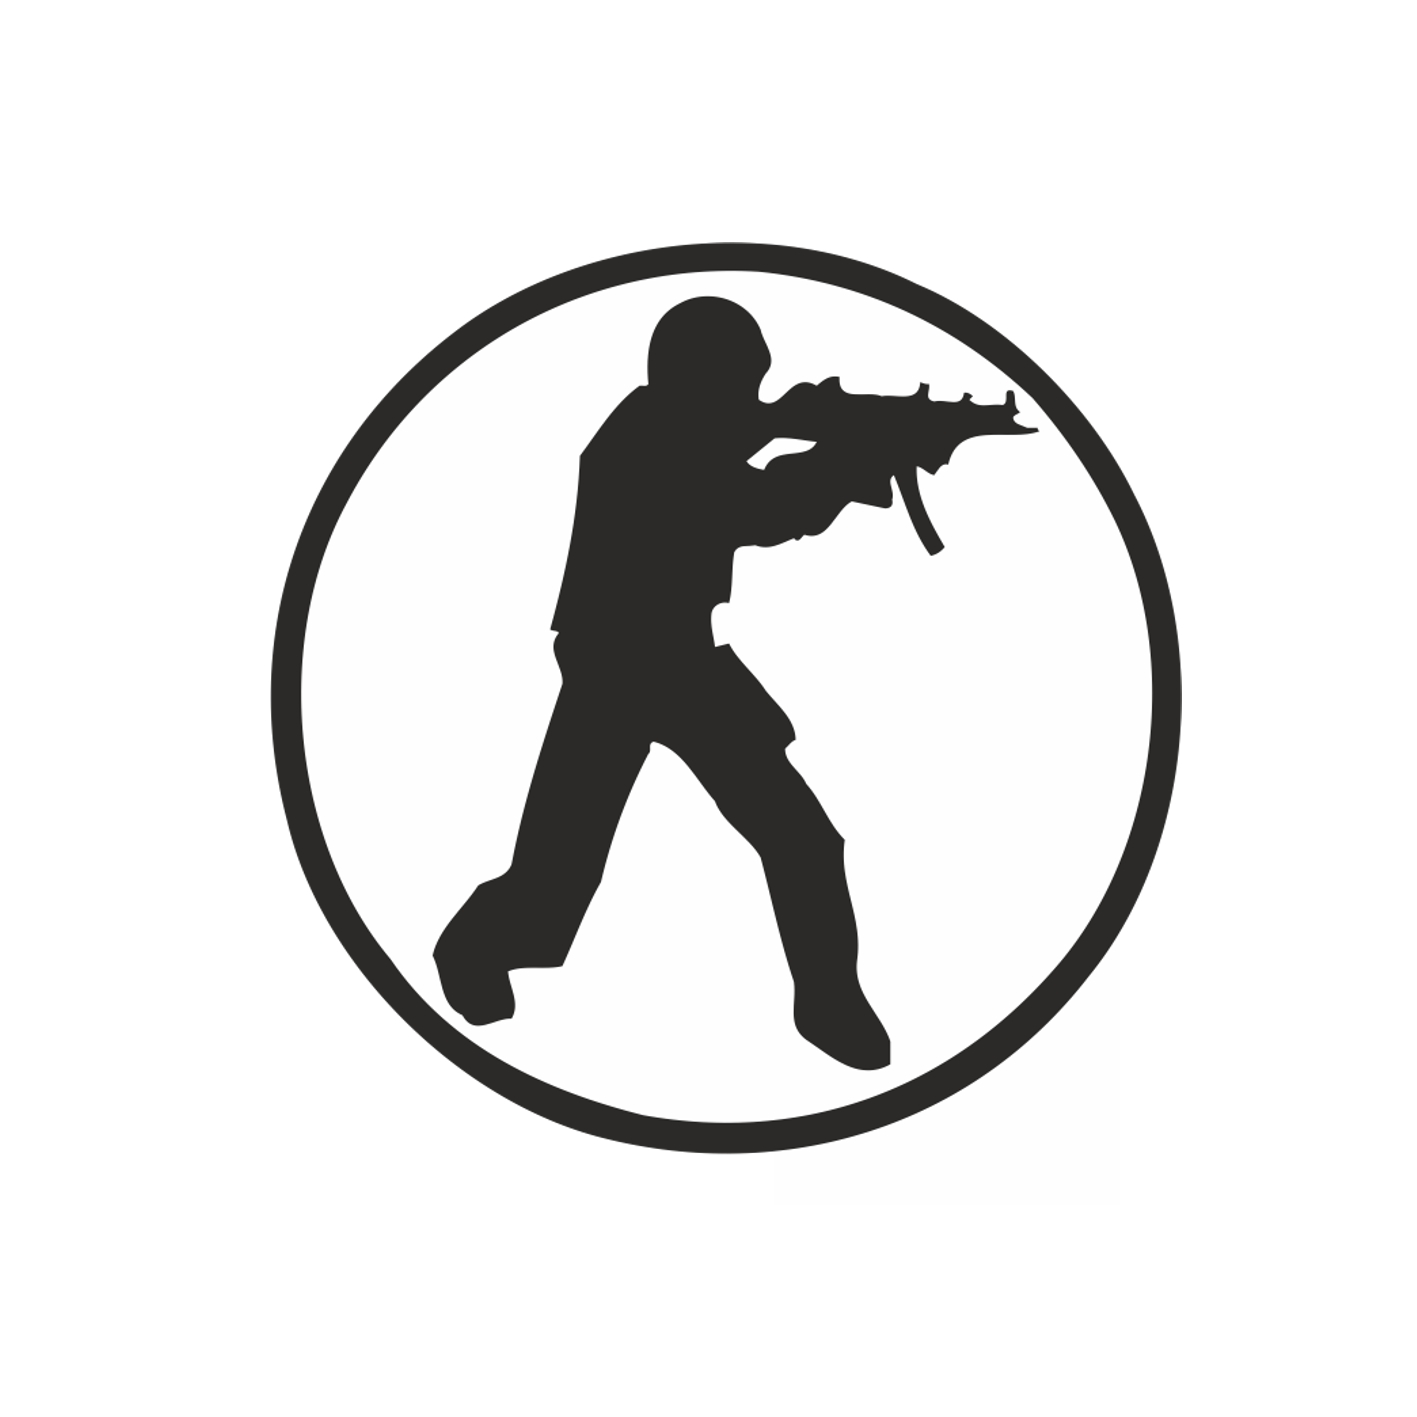 Counter-strike logo samolepka